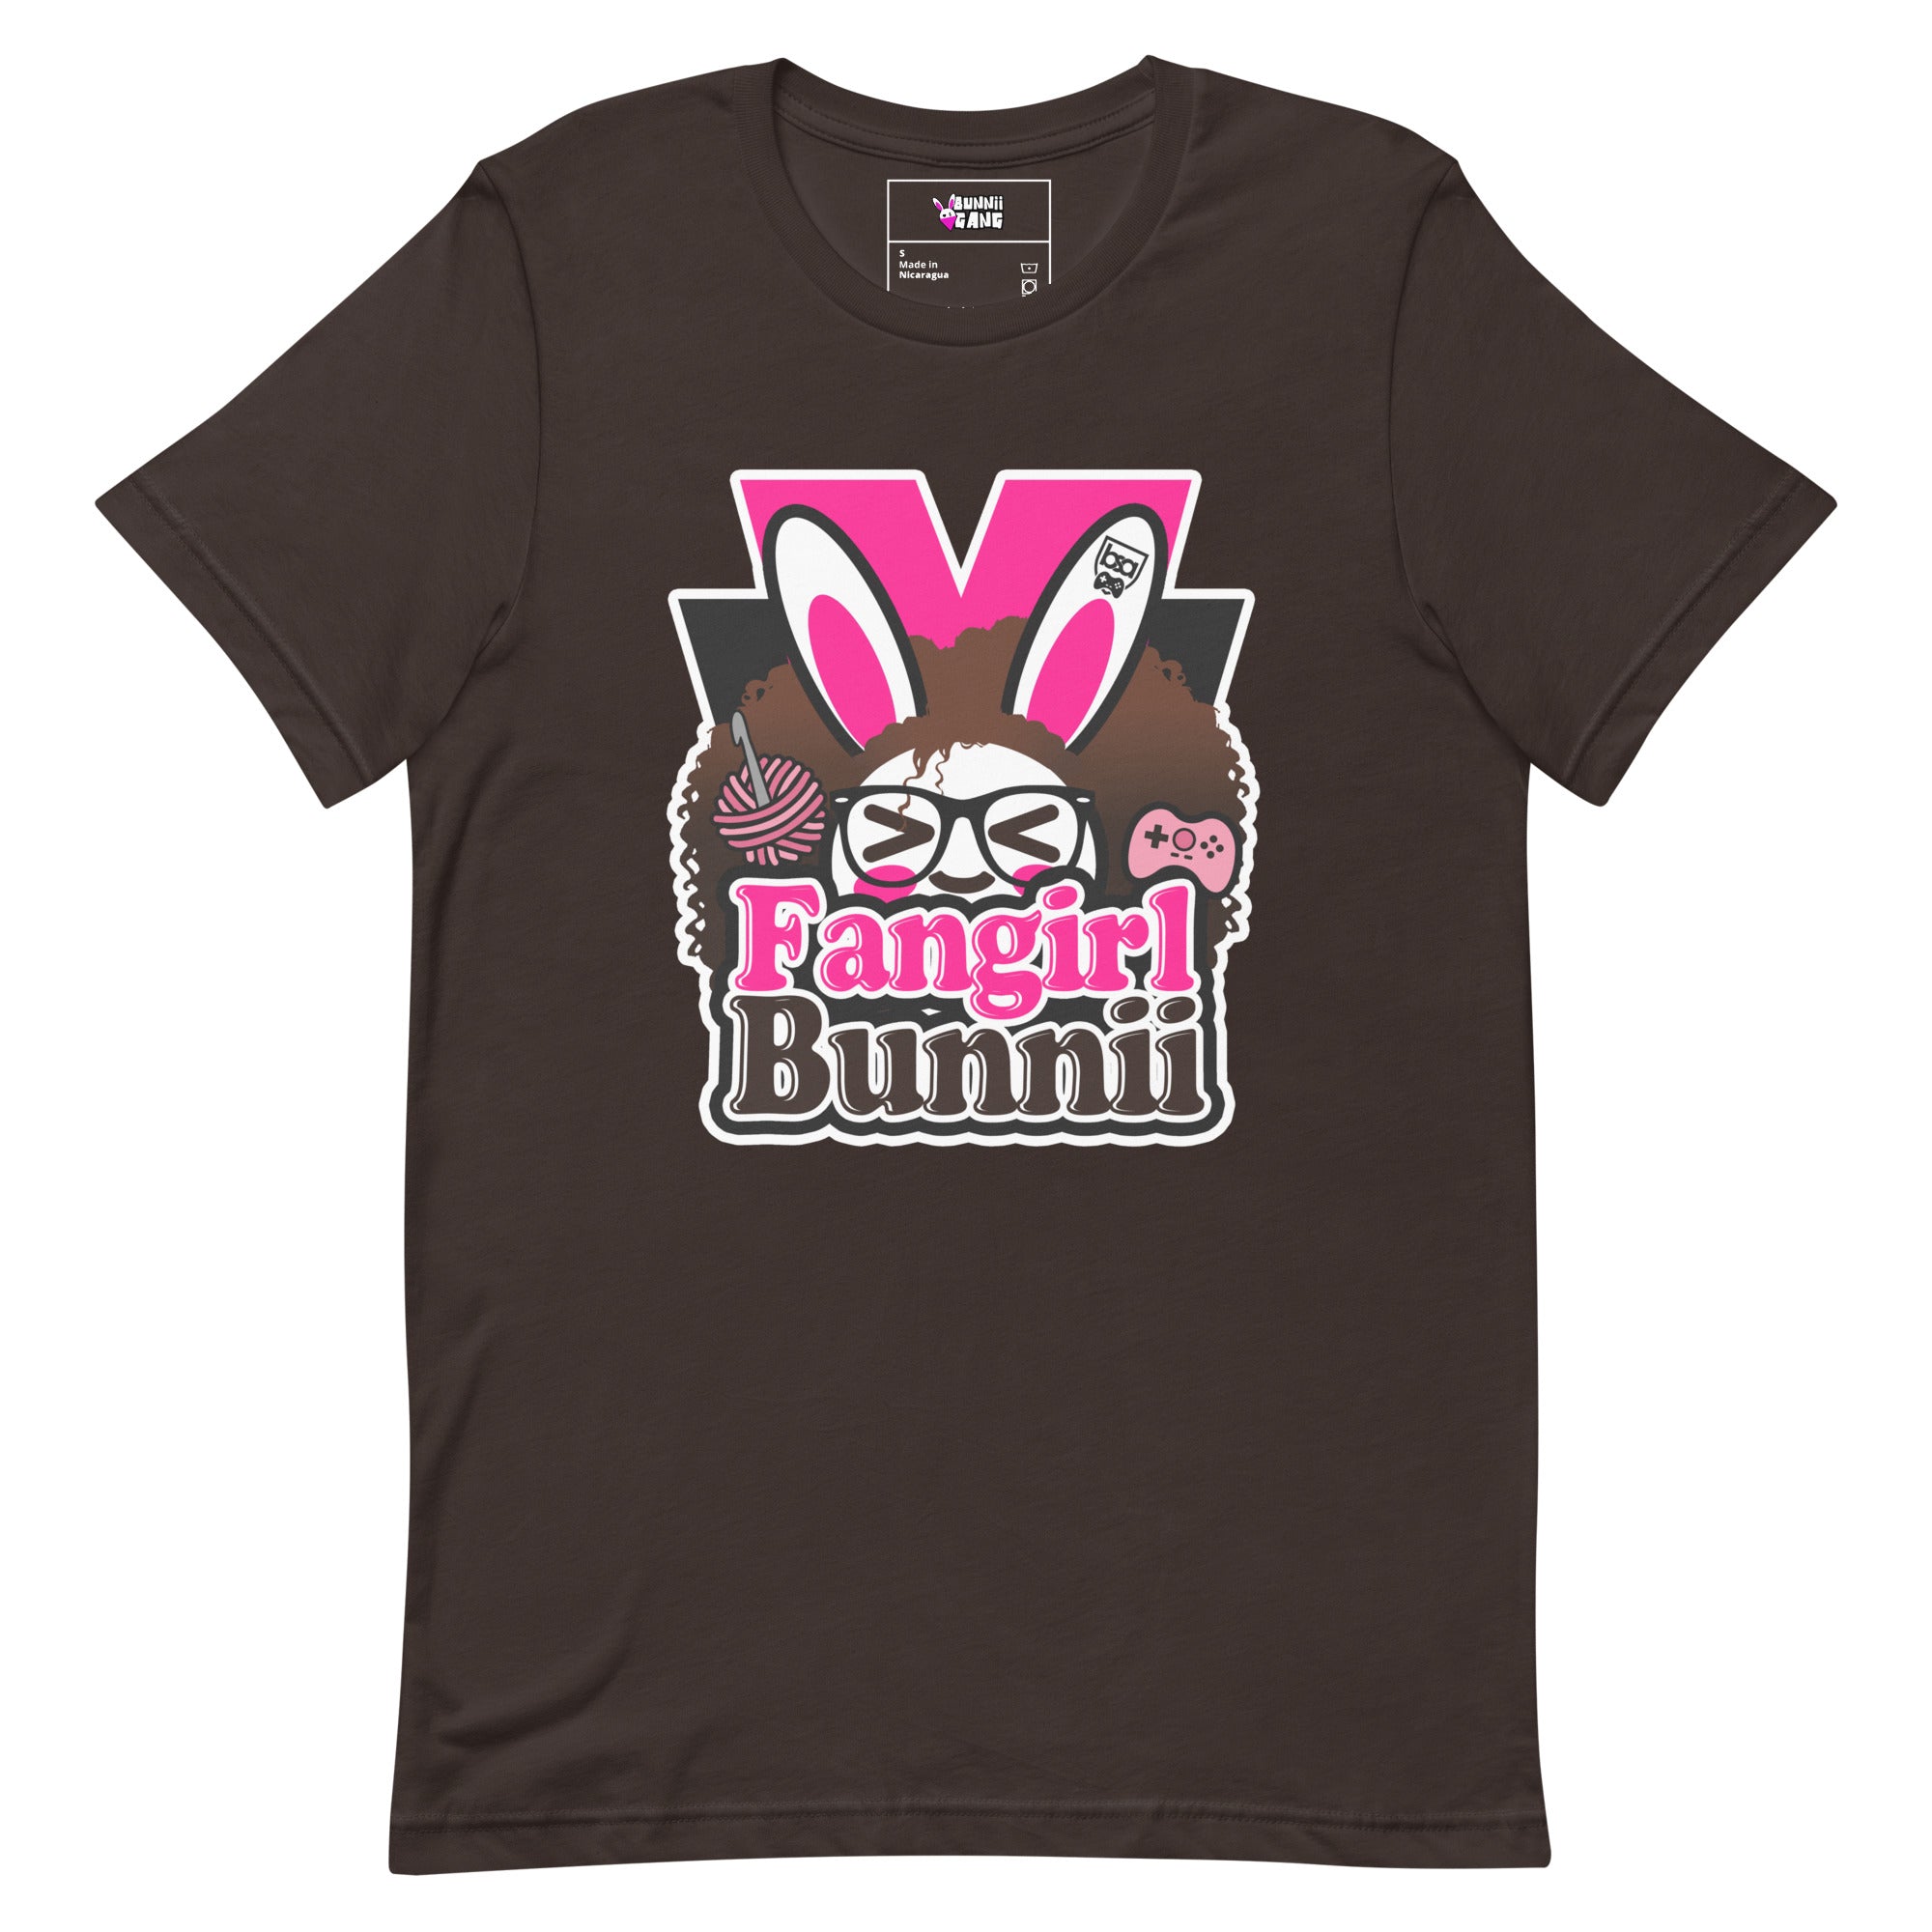 BUNNII GANG "FANGIRL BUNNII" Unisex t-shirt